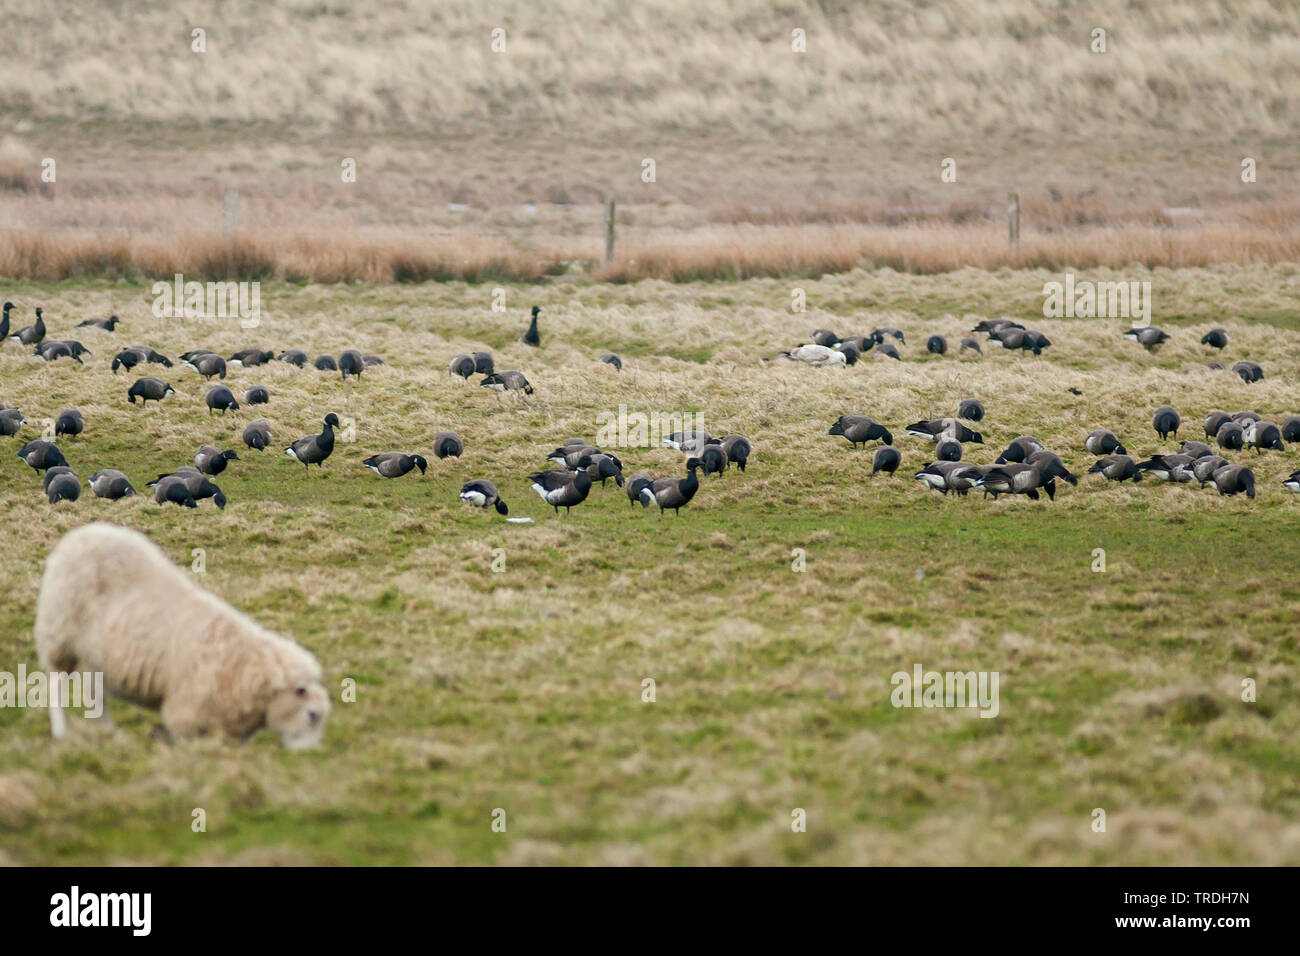 Black brant (Branta bernicla nigricans, Branta nigricans), troop with sheep on a pasture, Germany Stock Photo